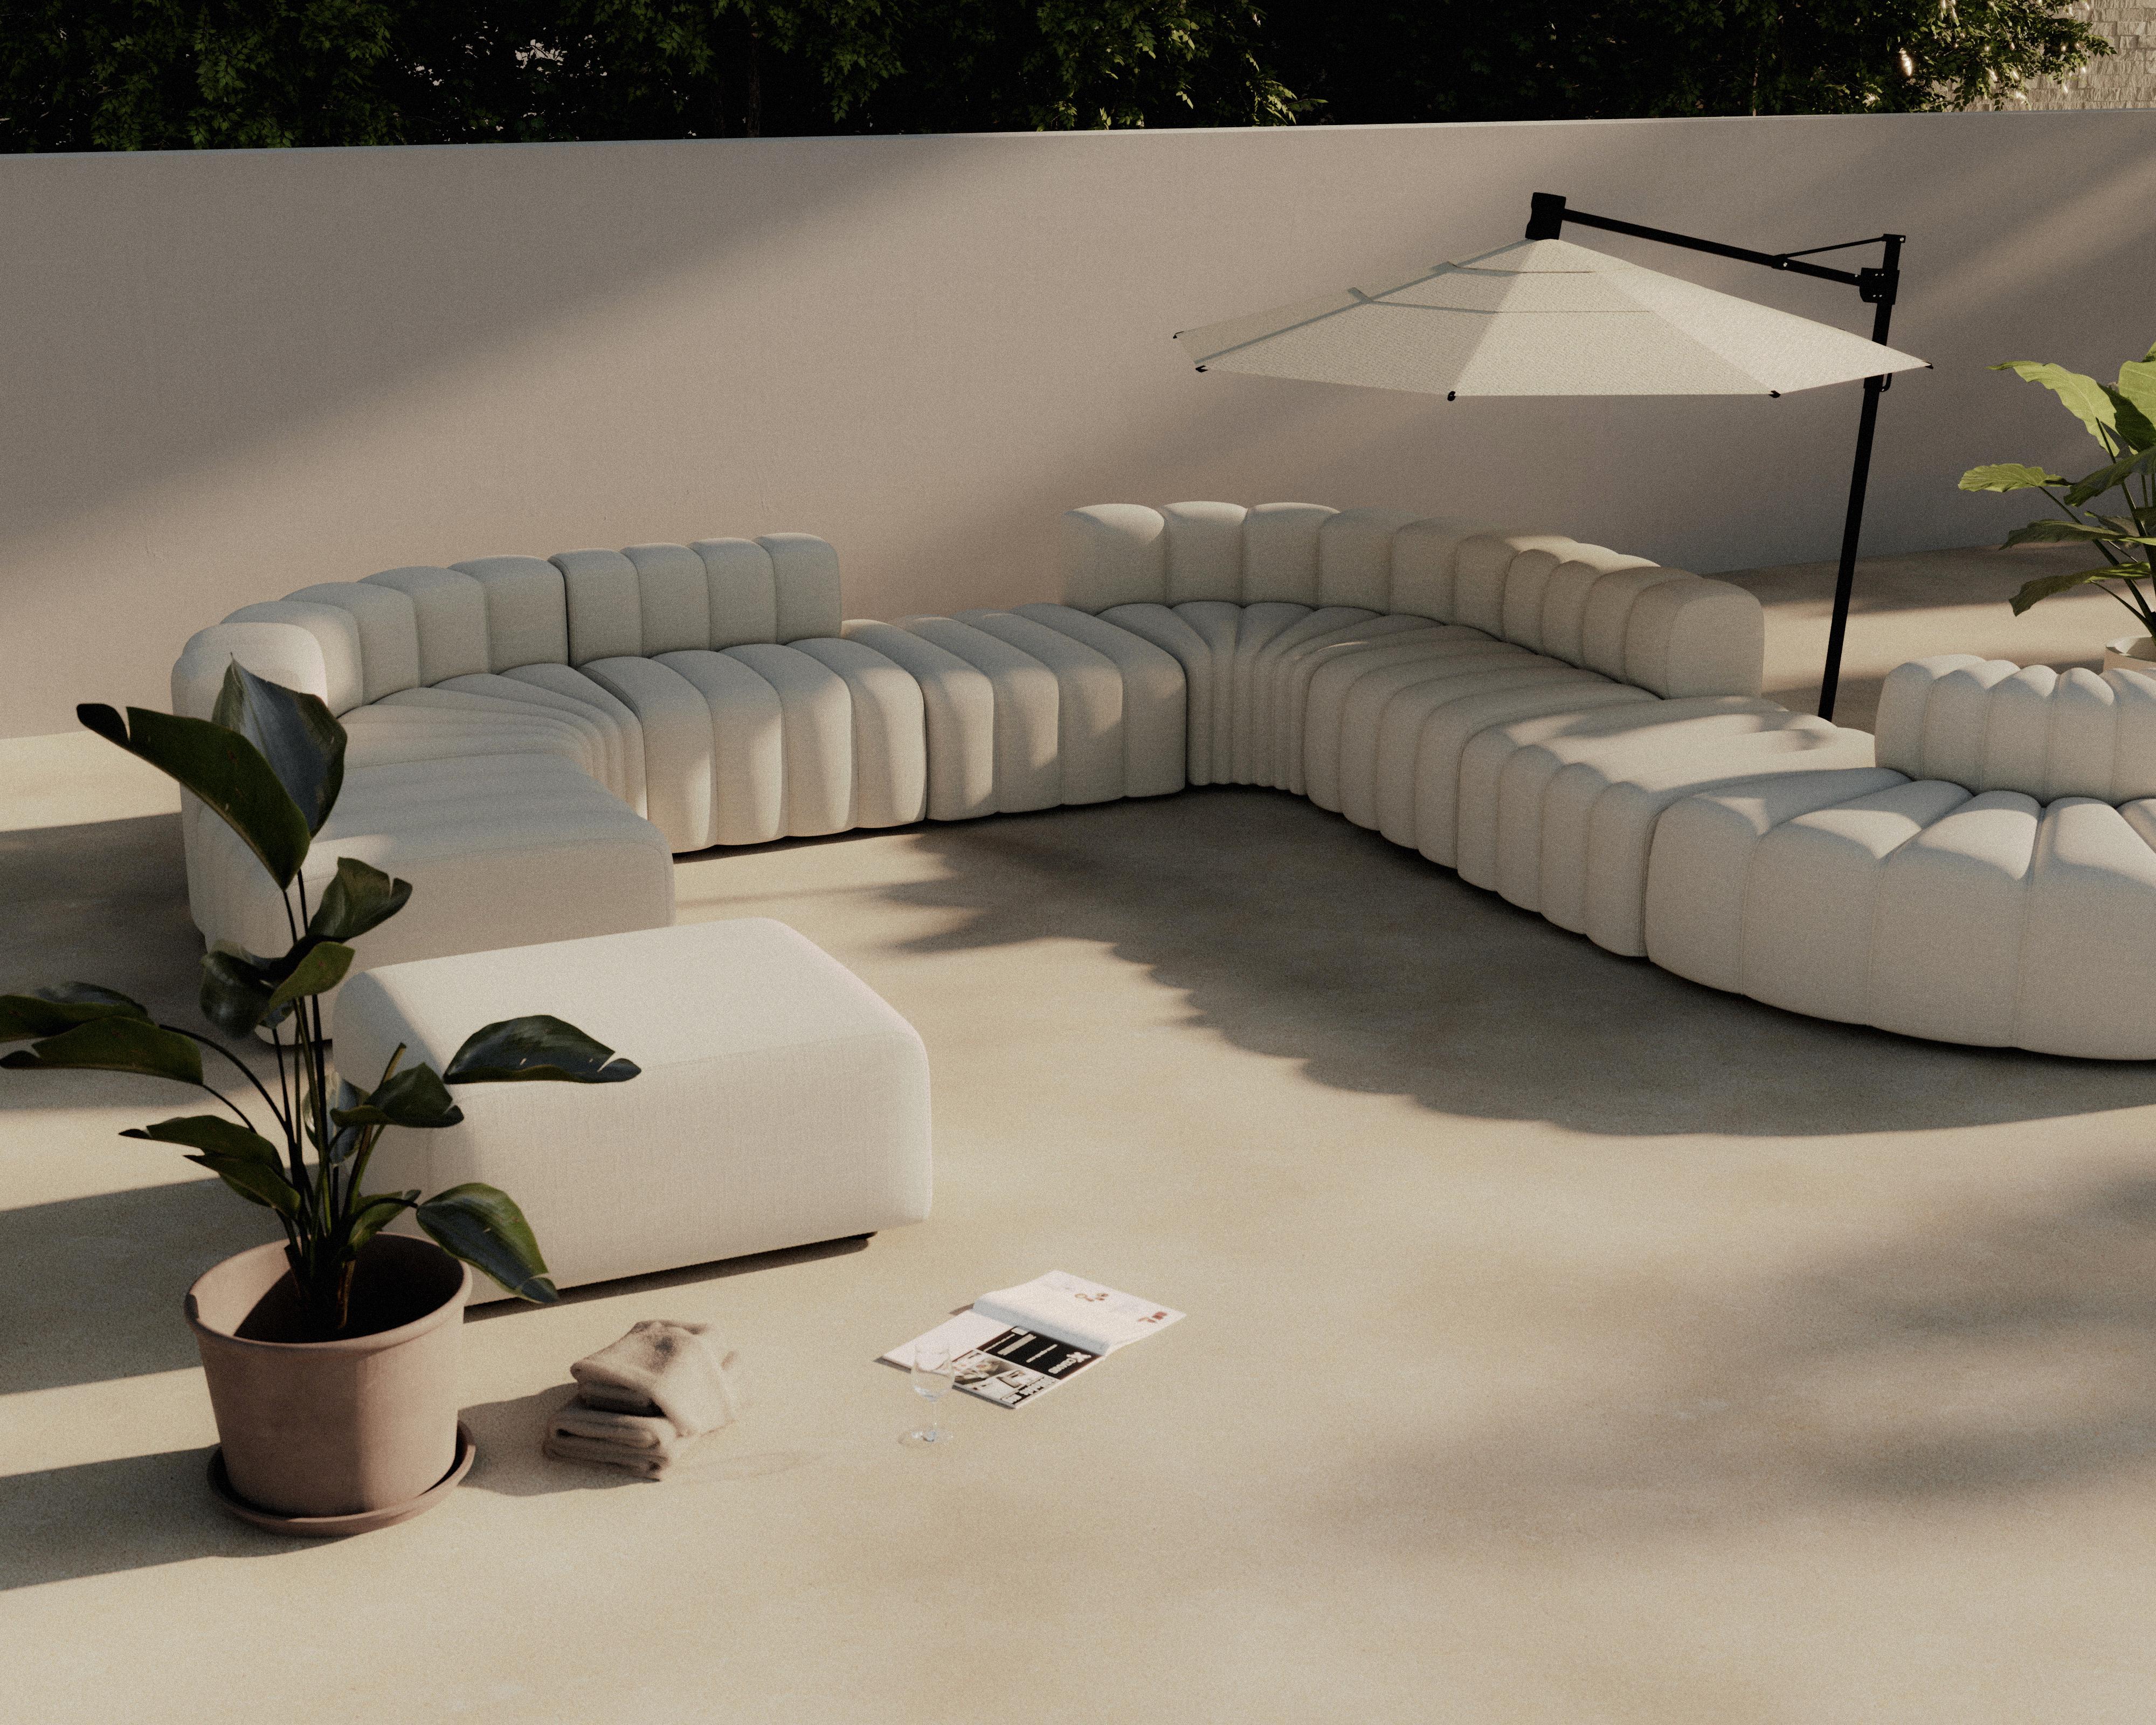 Other Studio Corner Modular Outdoor Sofa by NORR11